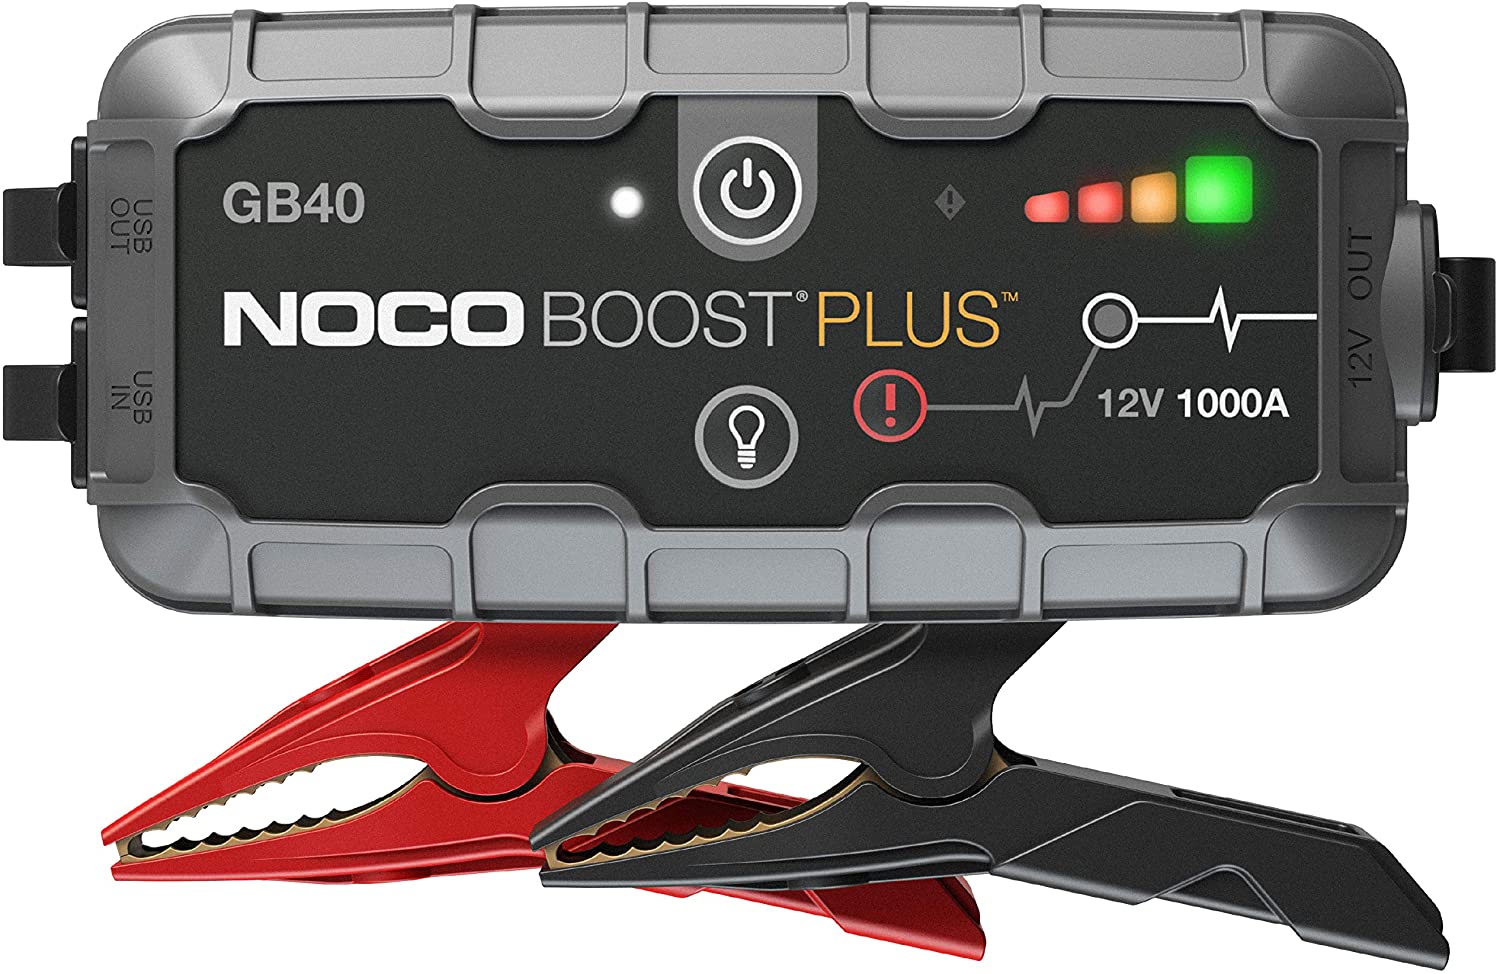 NOCO Boost Plus GB40 12V 1000A 40666 Starthilfe Powerbank Booster